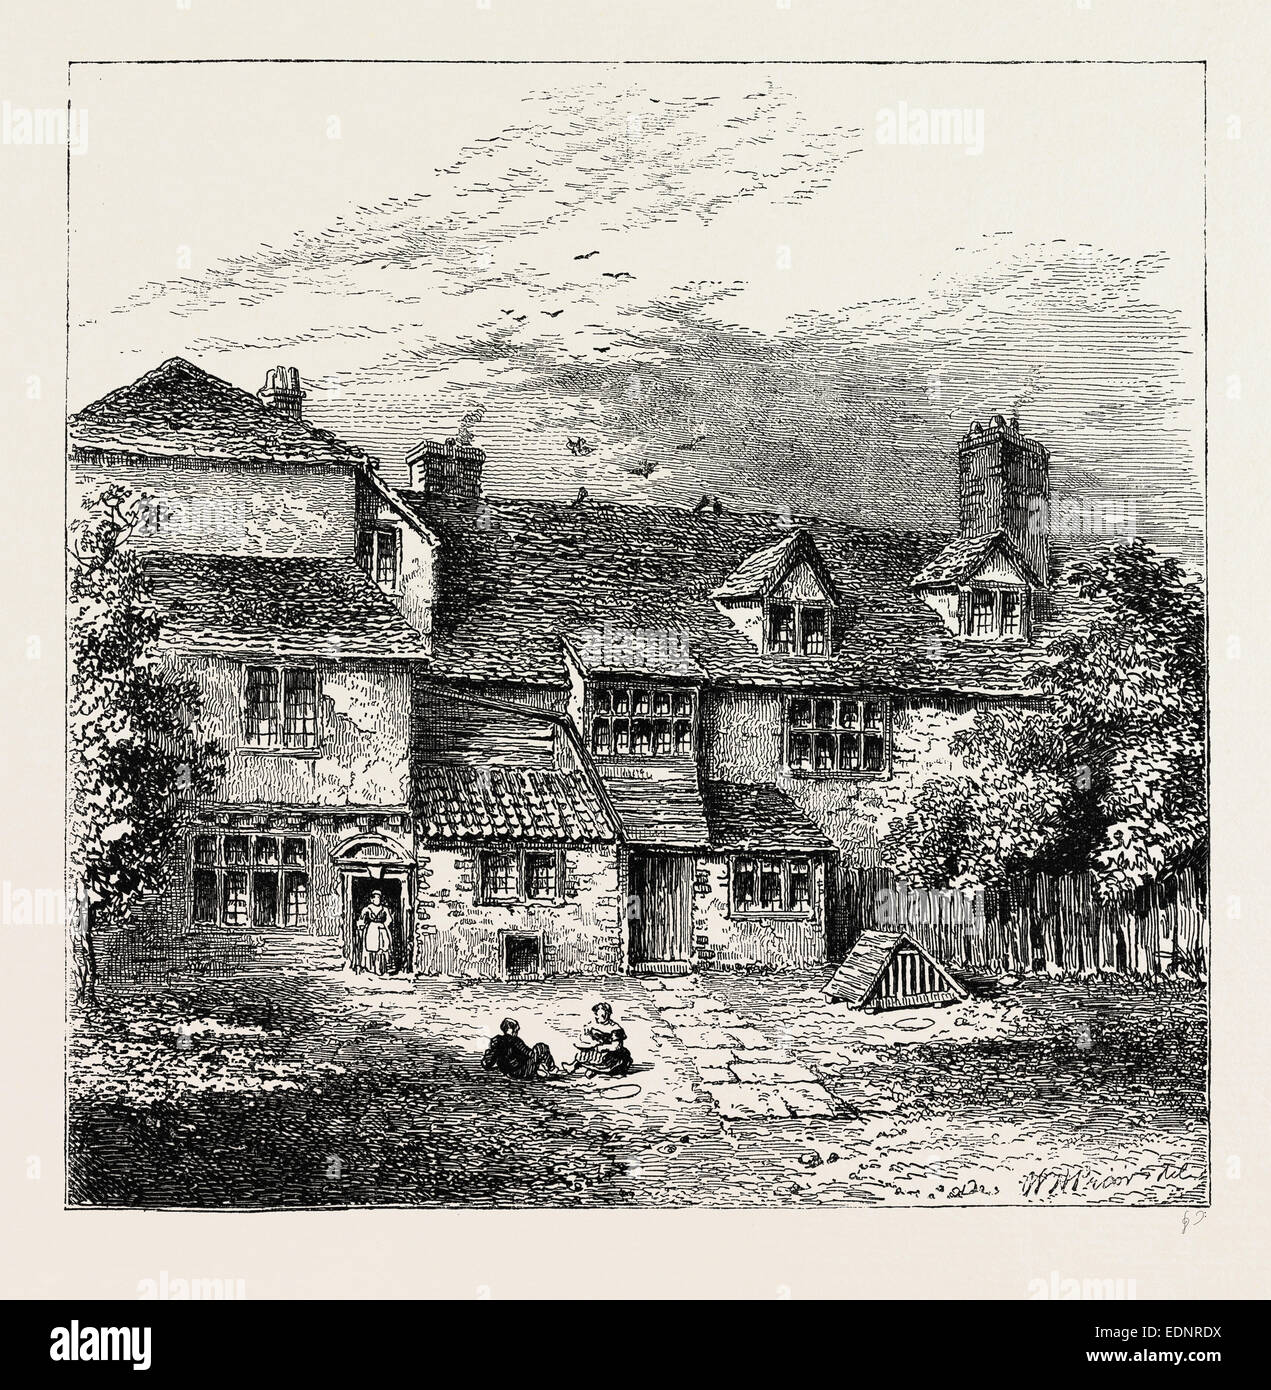 SIR WALTER RALEIGH HAUS. London, UK, 19. Jahrhundert Gravur Stockfoto